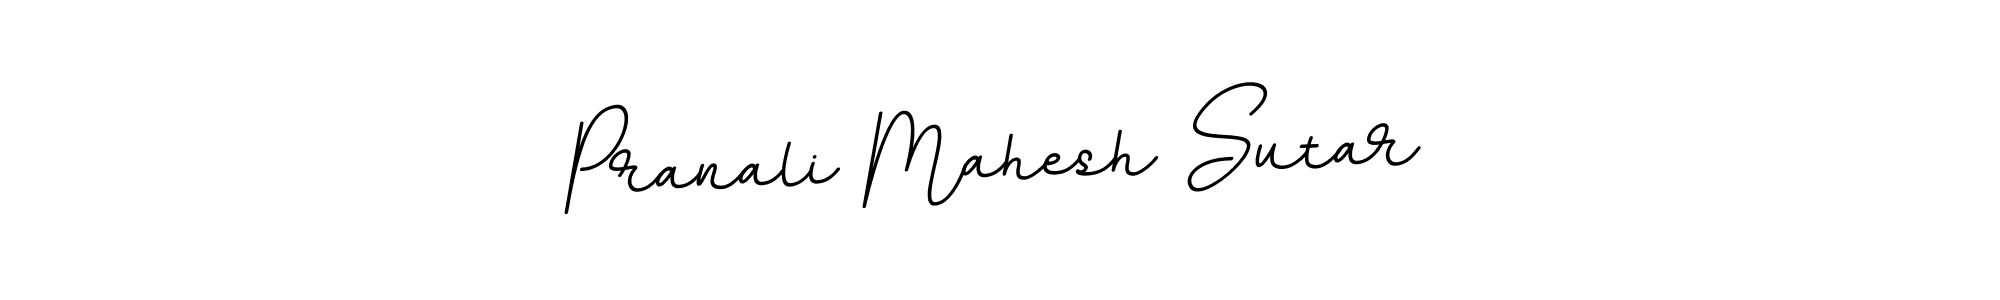 How to Draw Pranali Mahesh Sutar signature style? BallpointsItalic-DORy9 is a latest design signature styles for name Pranali Mahesh Sutar. Pranali Mahesh Sutar signature style 11 images and pictures png